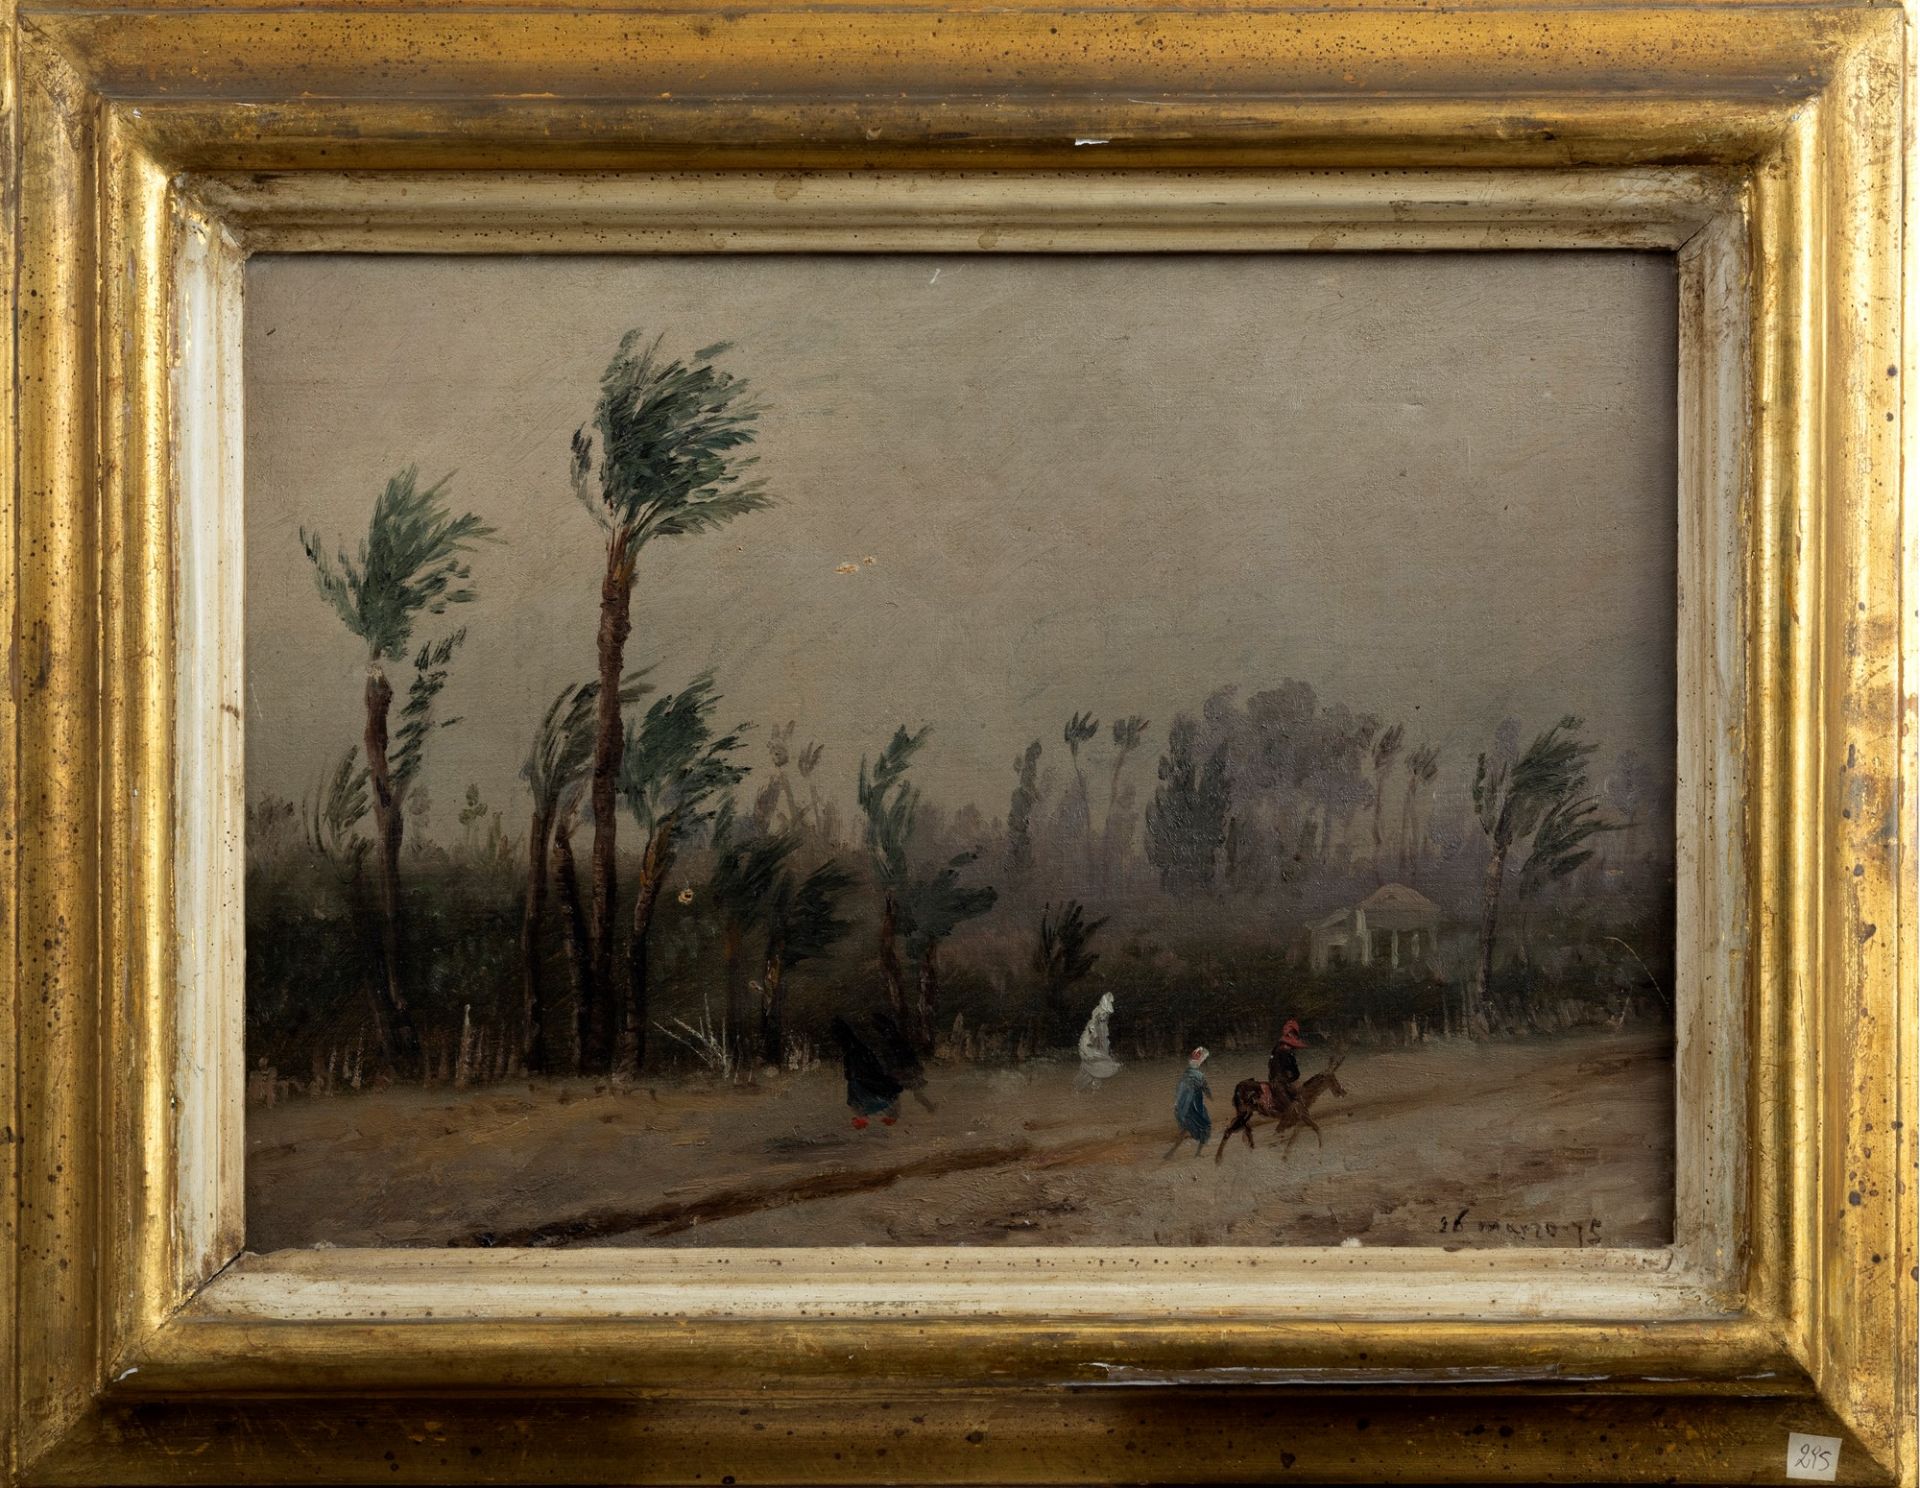 Joseph Haimann (Milano 1828-Alessandria d'Egitto 1883) - Wind in the palms, 1875 - Image 2 of 3